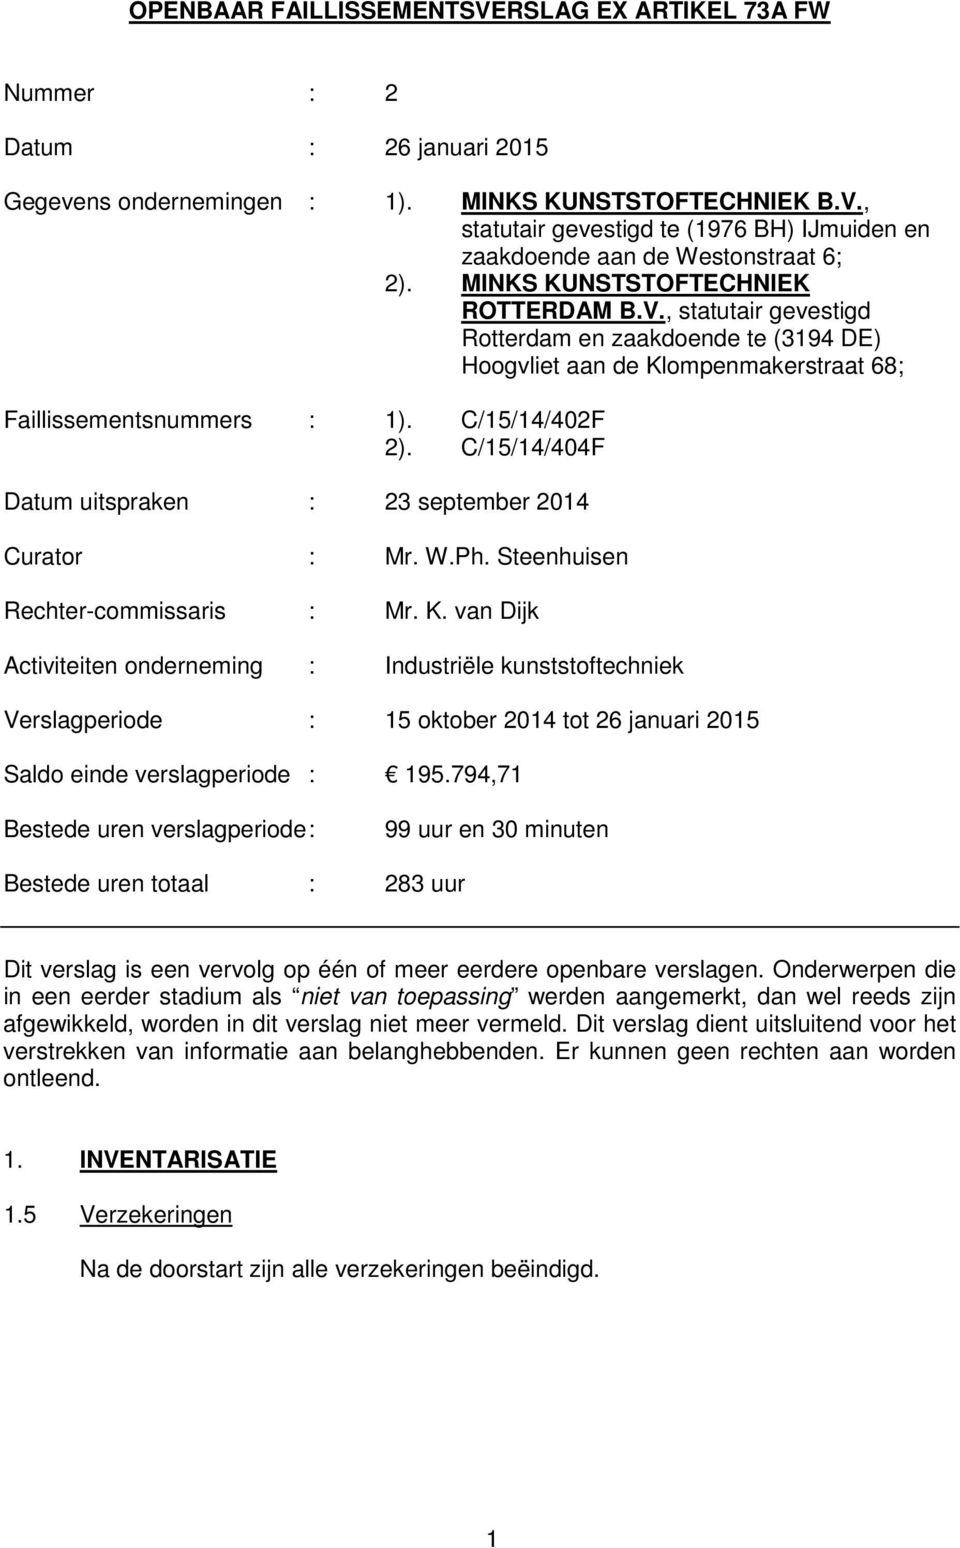 C/15/14/404F Datum uitspraken : 23 september 2014 Curator : Mr. W.Ph. Steenhuisen Rechtercommissaris : Mr. K.